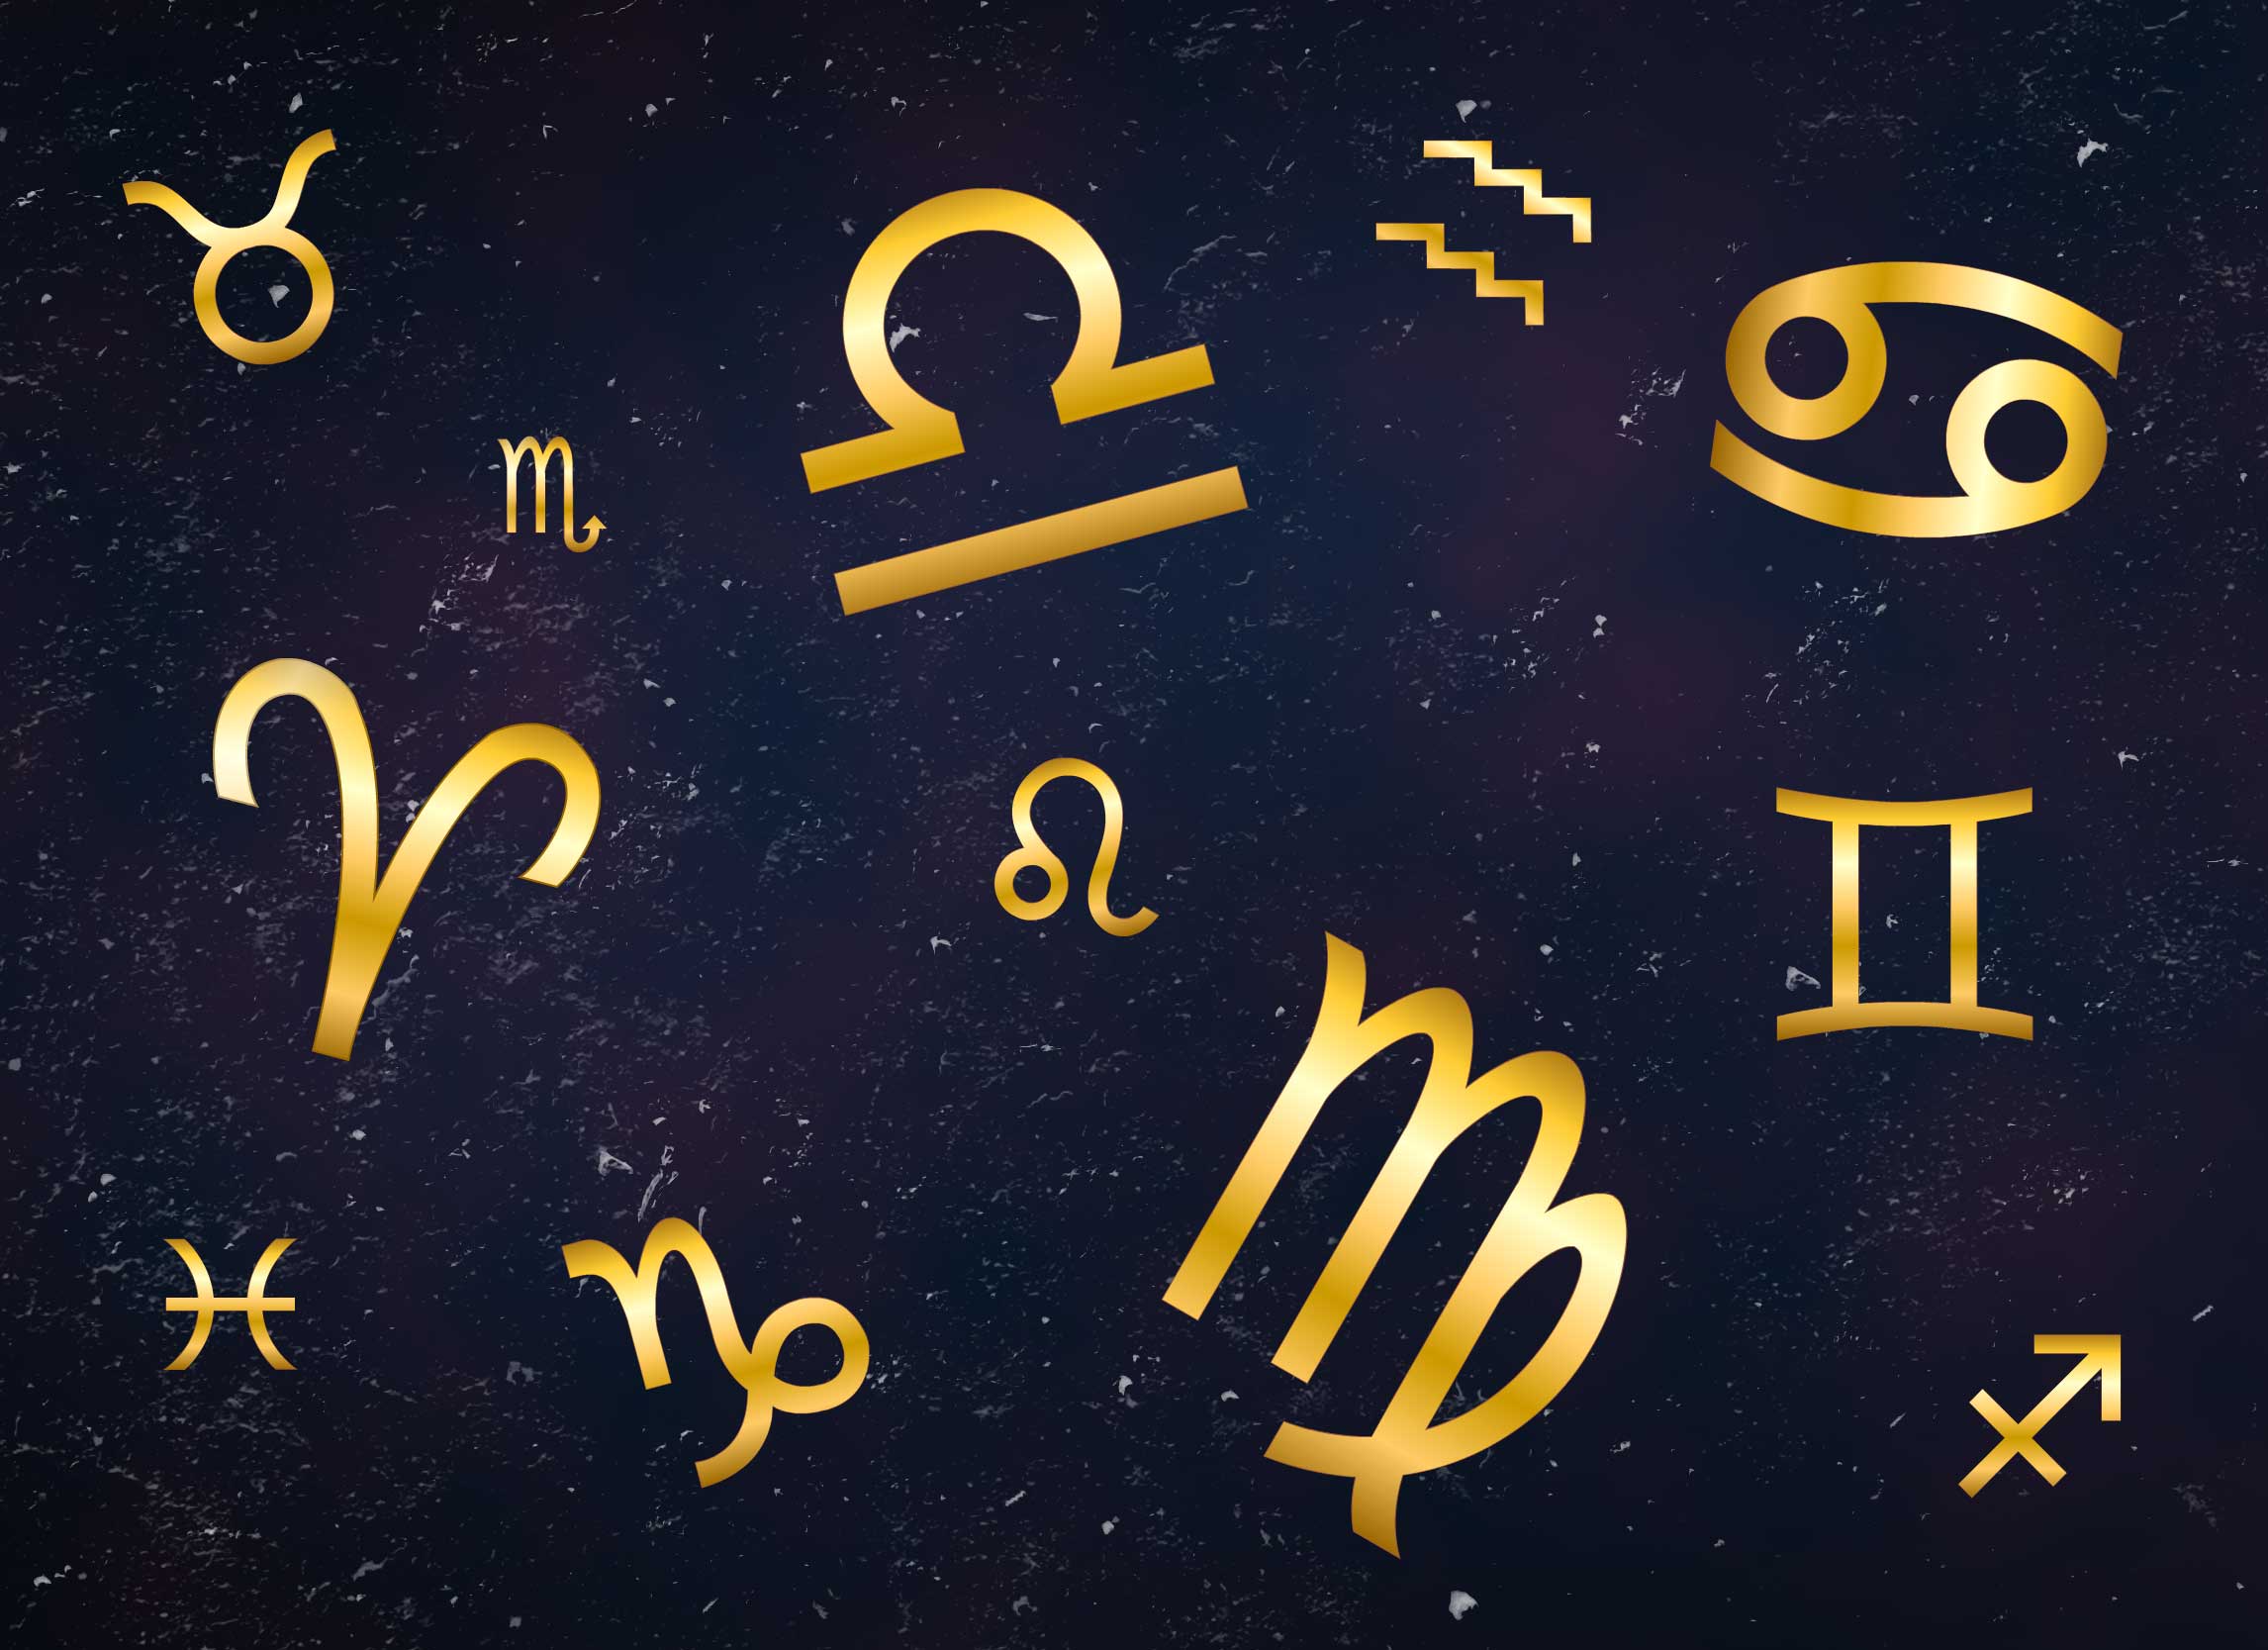 zodiac sign ymbols copy and paste not emoji